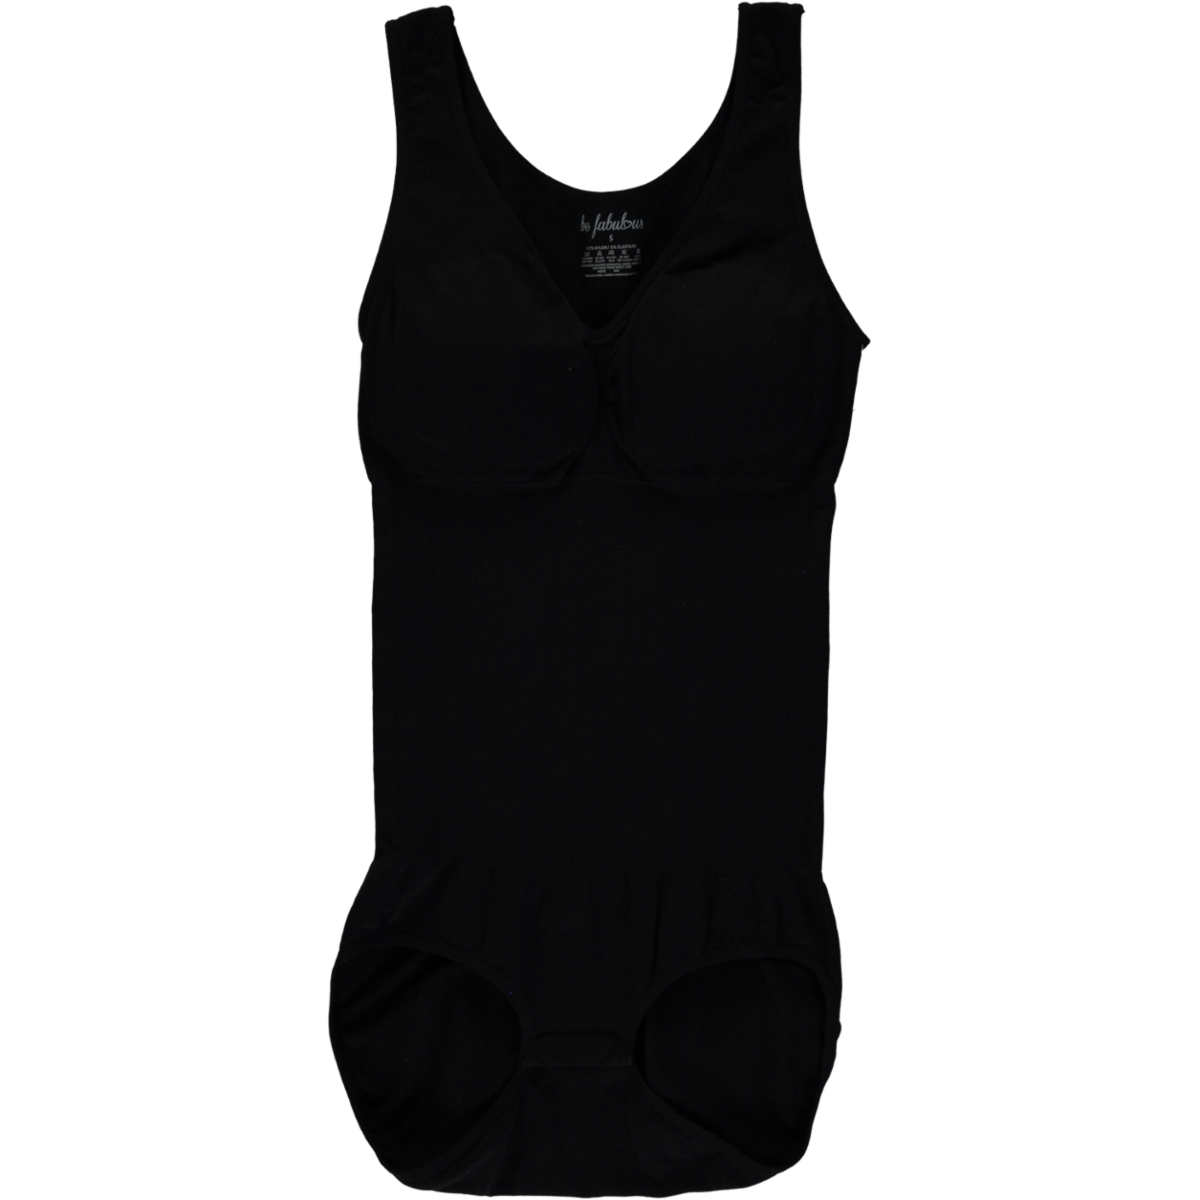 Shapewear Bodysuit, S - XXL. R139.95, Ackermans